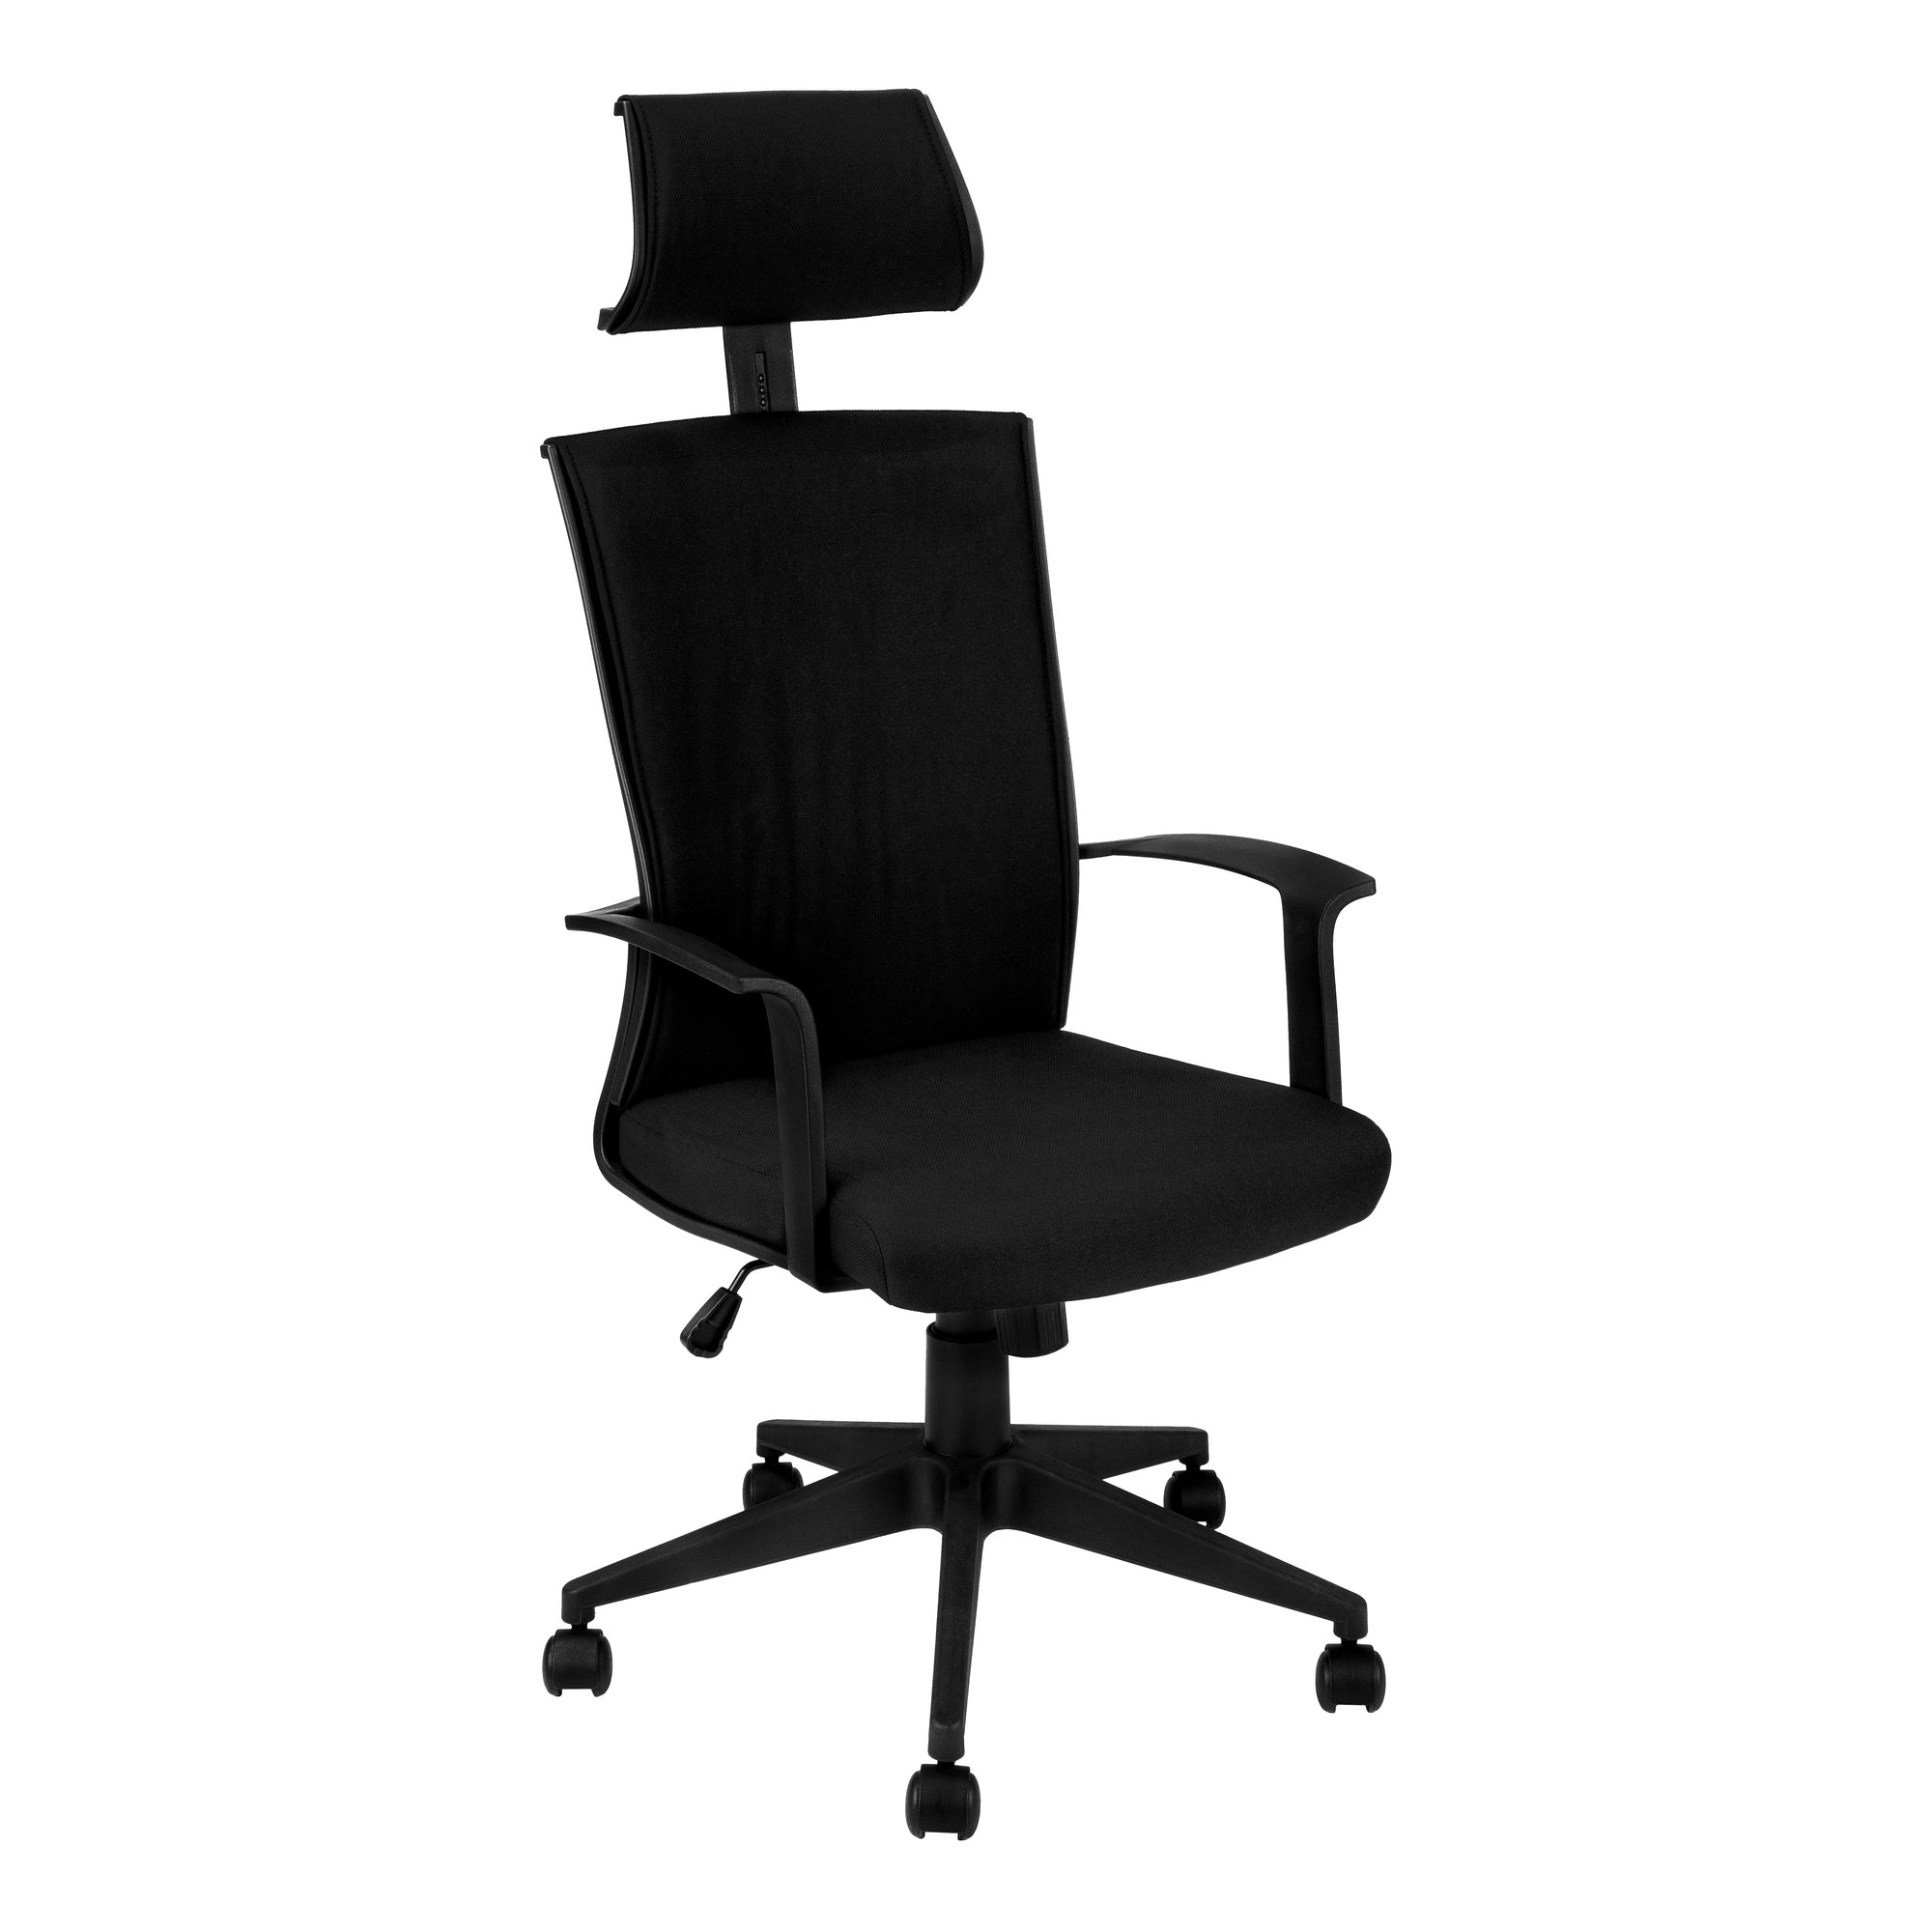 Office Chair - Black / Black Fabric / High Back Executive